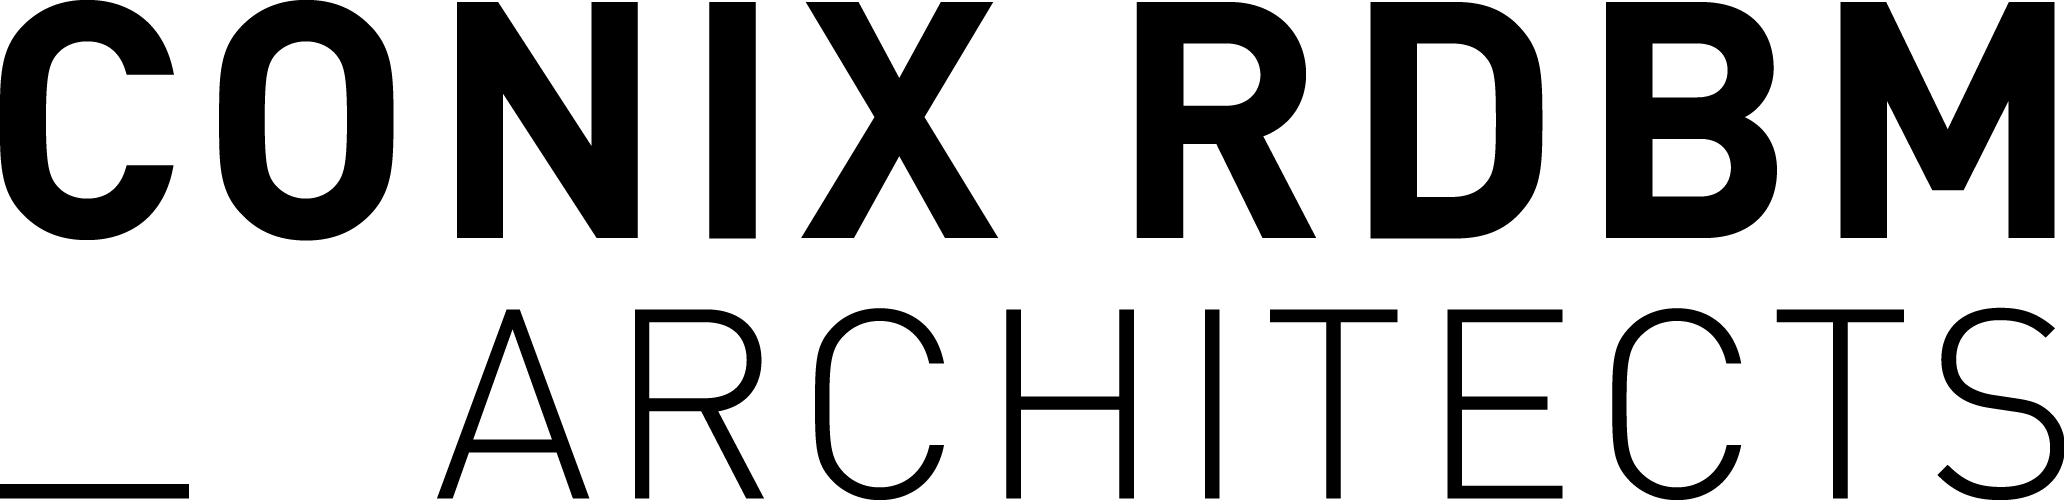 CONICRDBM-logo-zwart